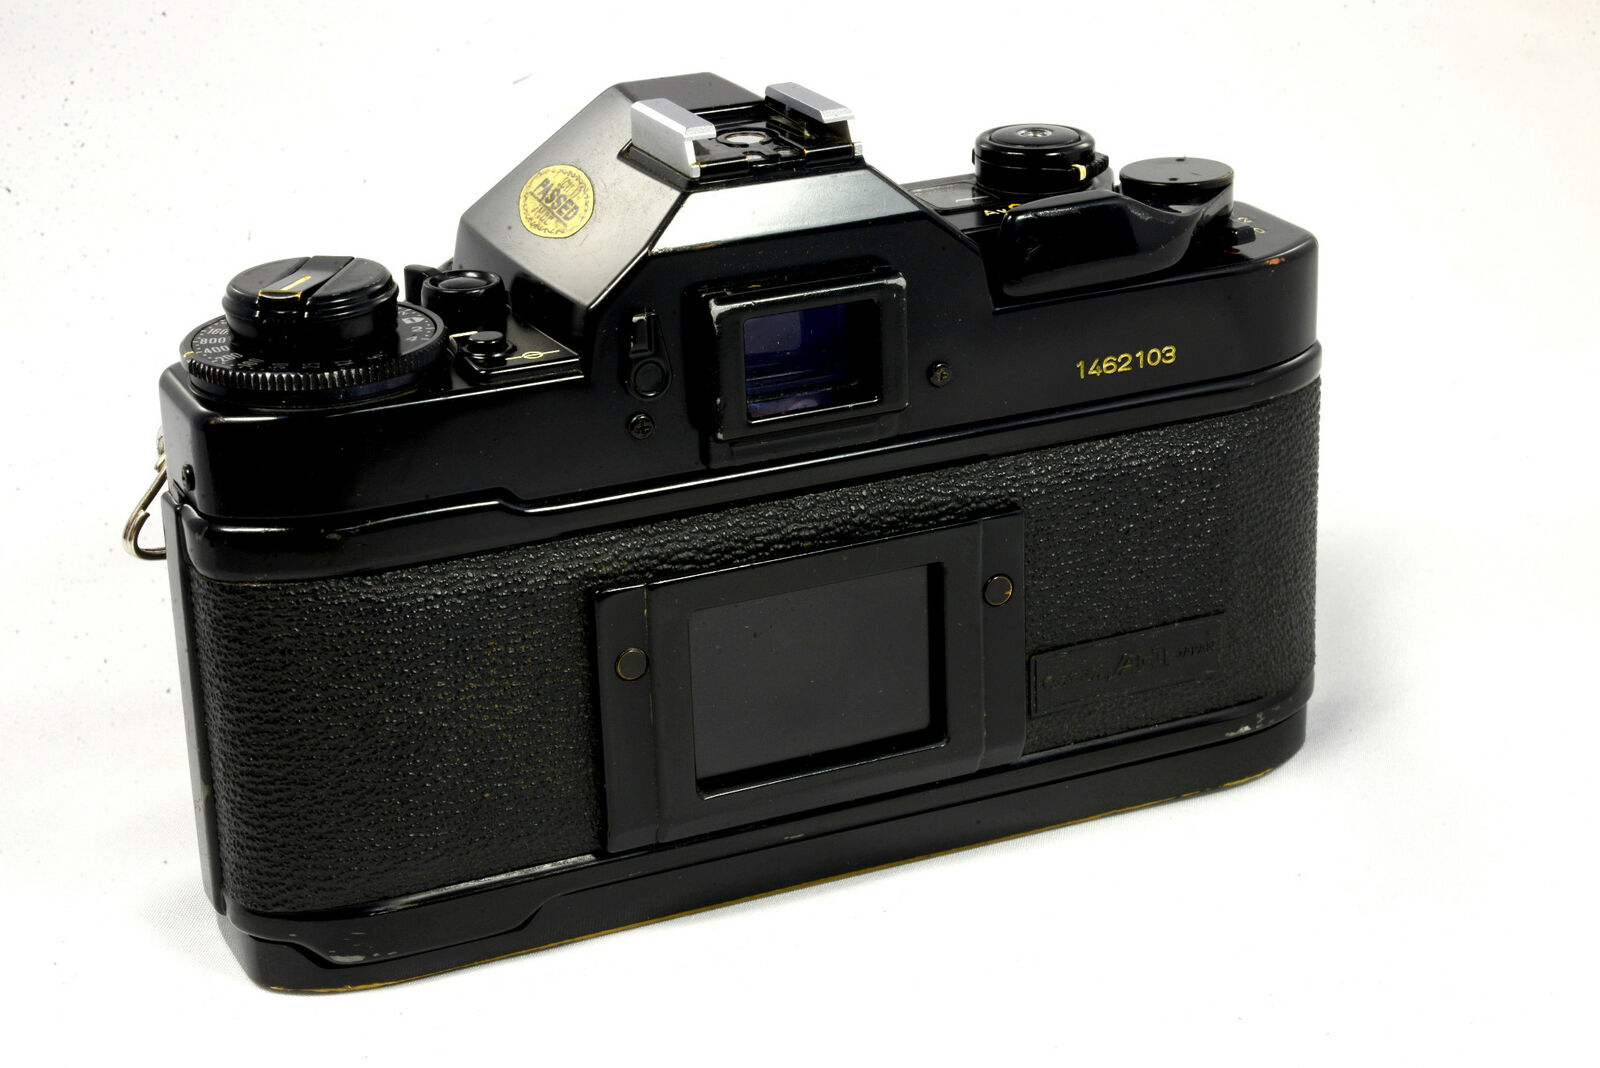 Canon A1 A-1 Film Camera Manual Focus Camera Body Only (no lens) - Good